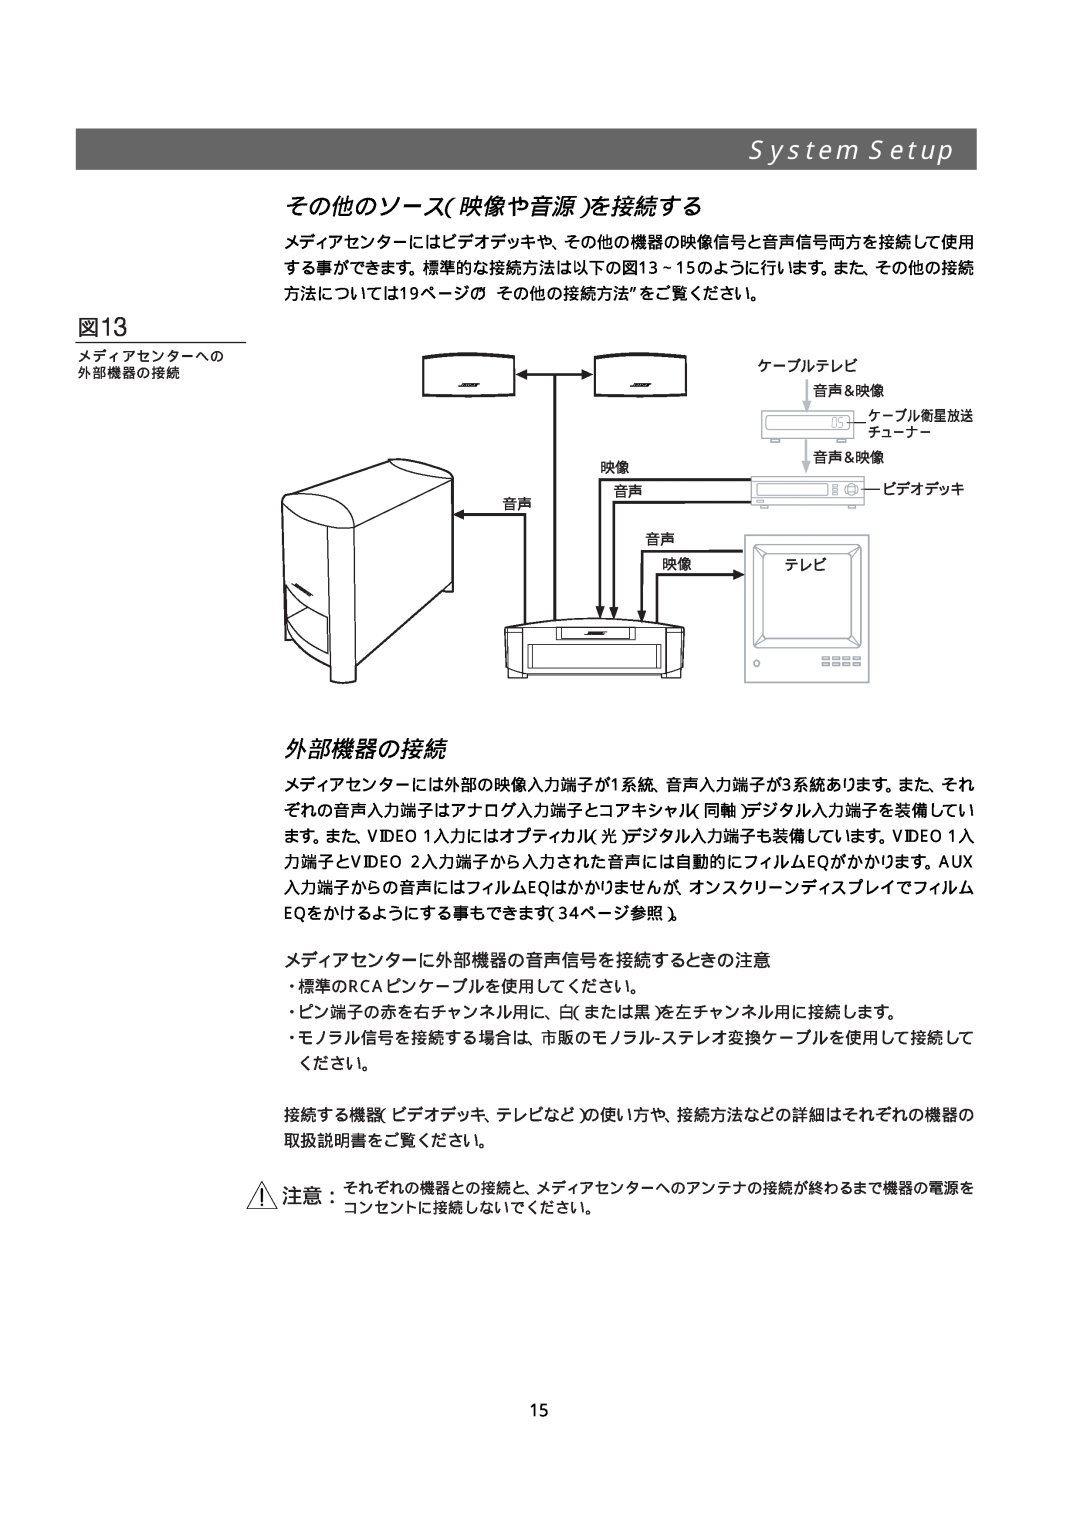 Bose 321GS owner manual その他のソース（映像や音源）を接続する, 外部機器の接続, System Setup, メディアセンターに外部機器の音声信号を接続するときの注意 